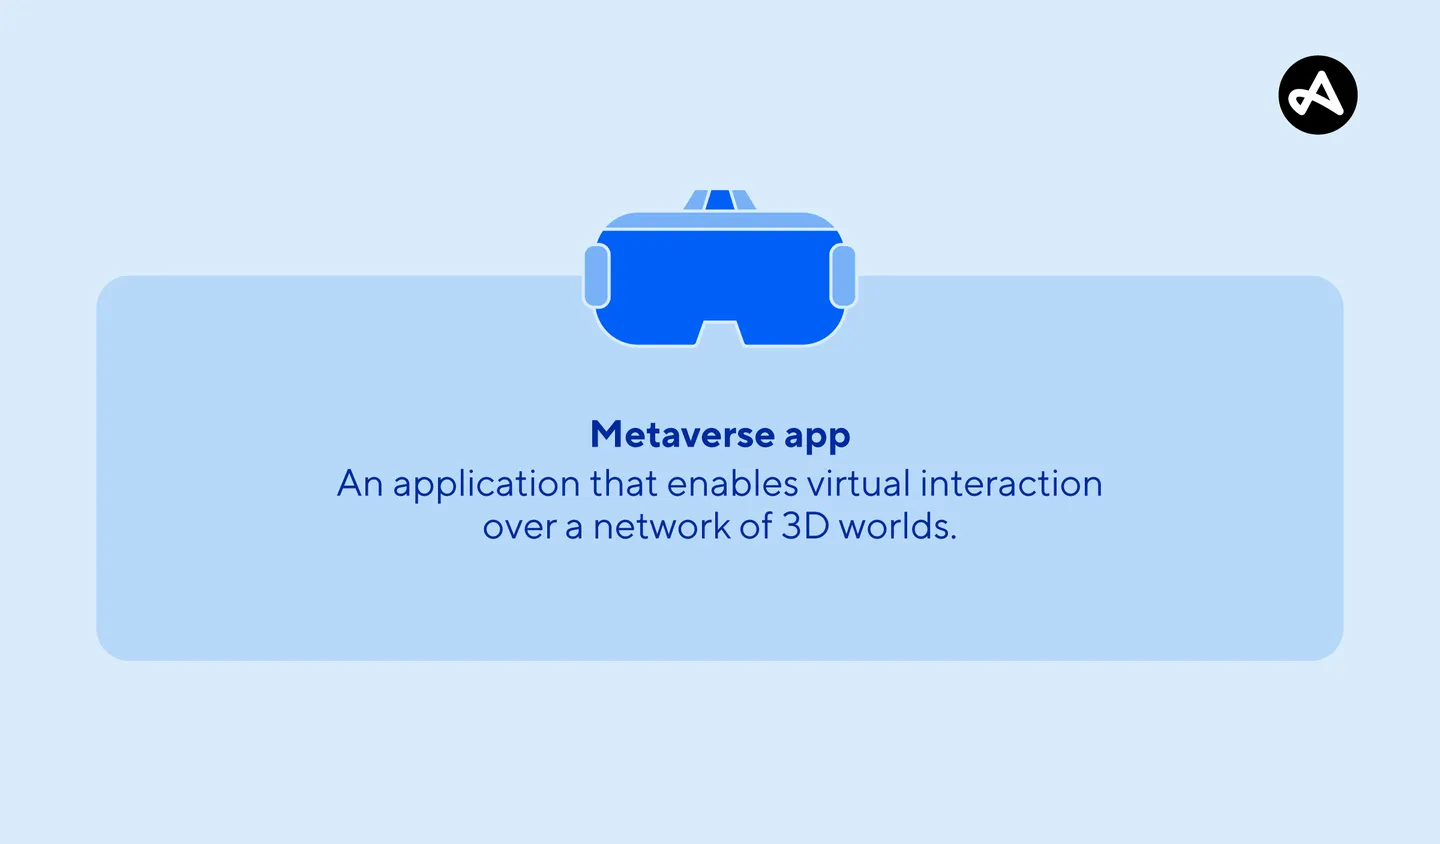 Metaverse app definition